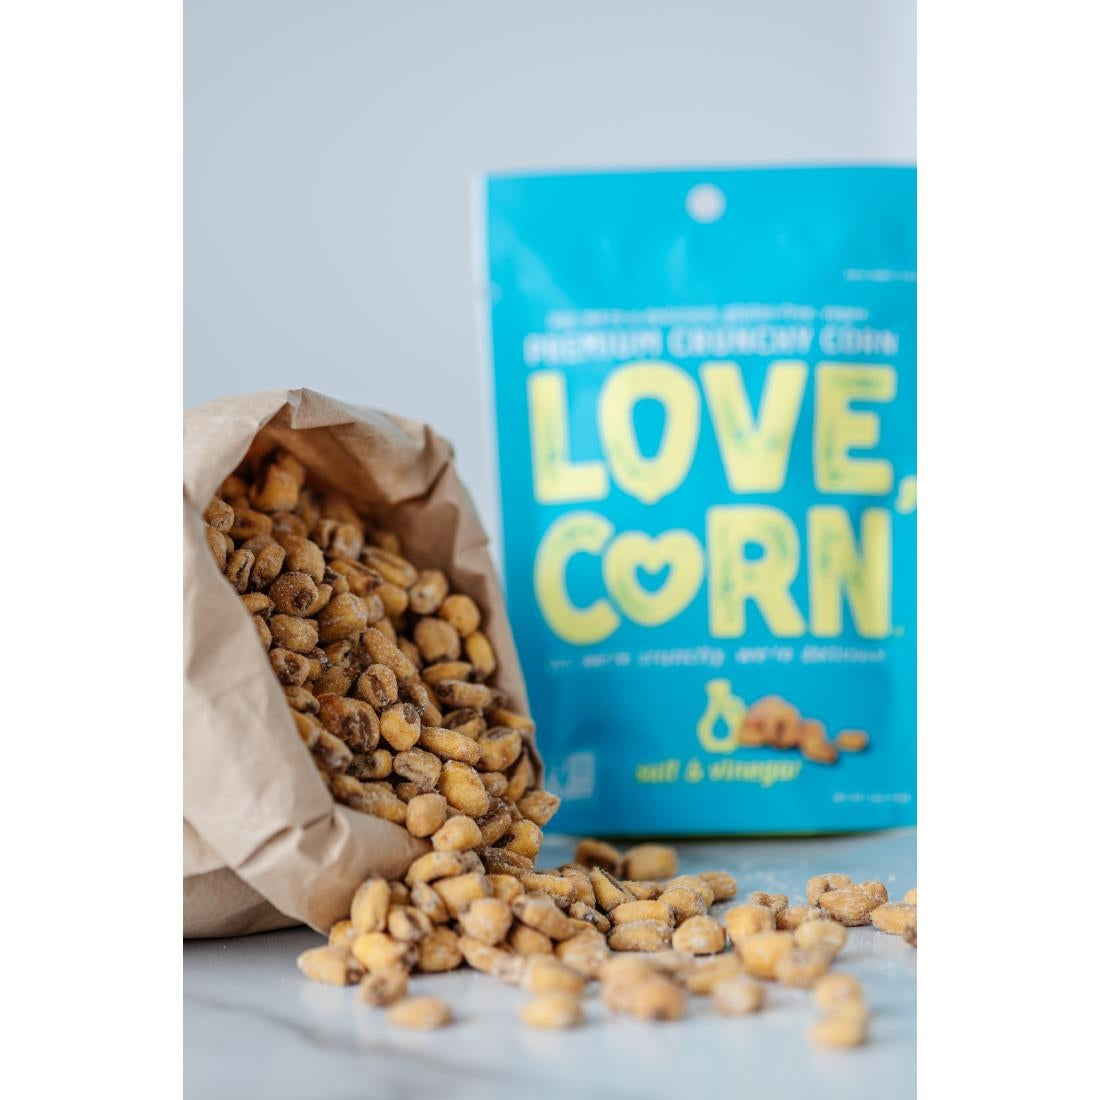 CZ754 LOVE CORN Crunchy Corn Snack Salt & Vinegar (10x45g) JD Catering Equipment Solutions Ltd